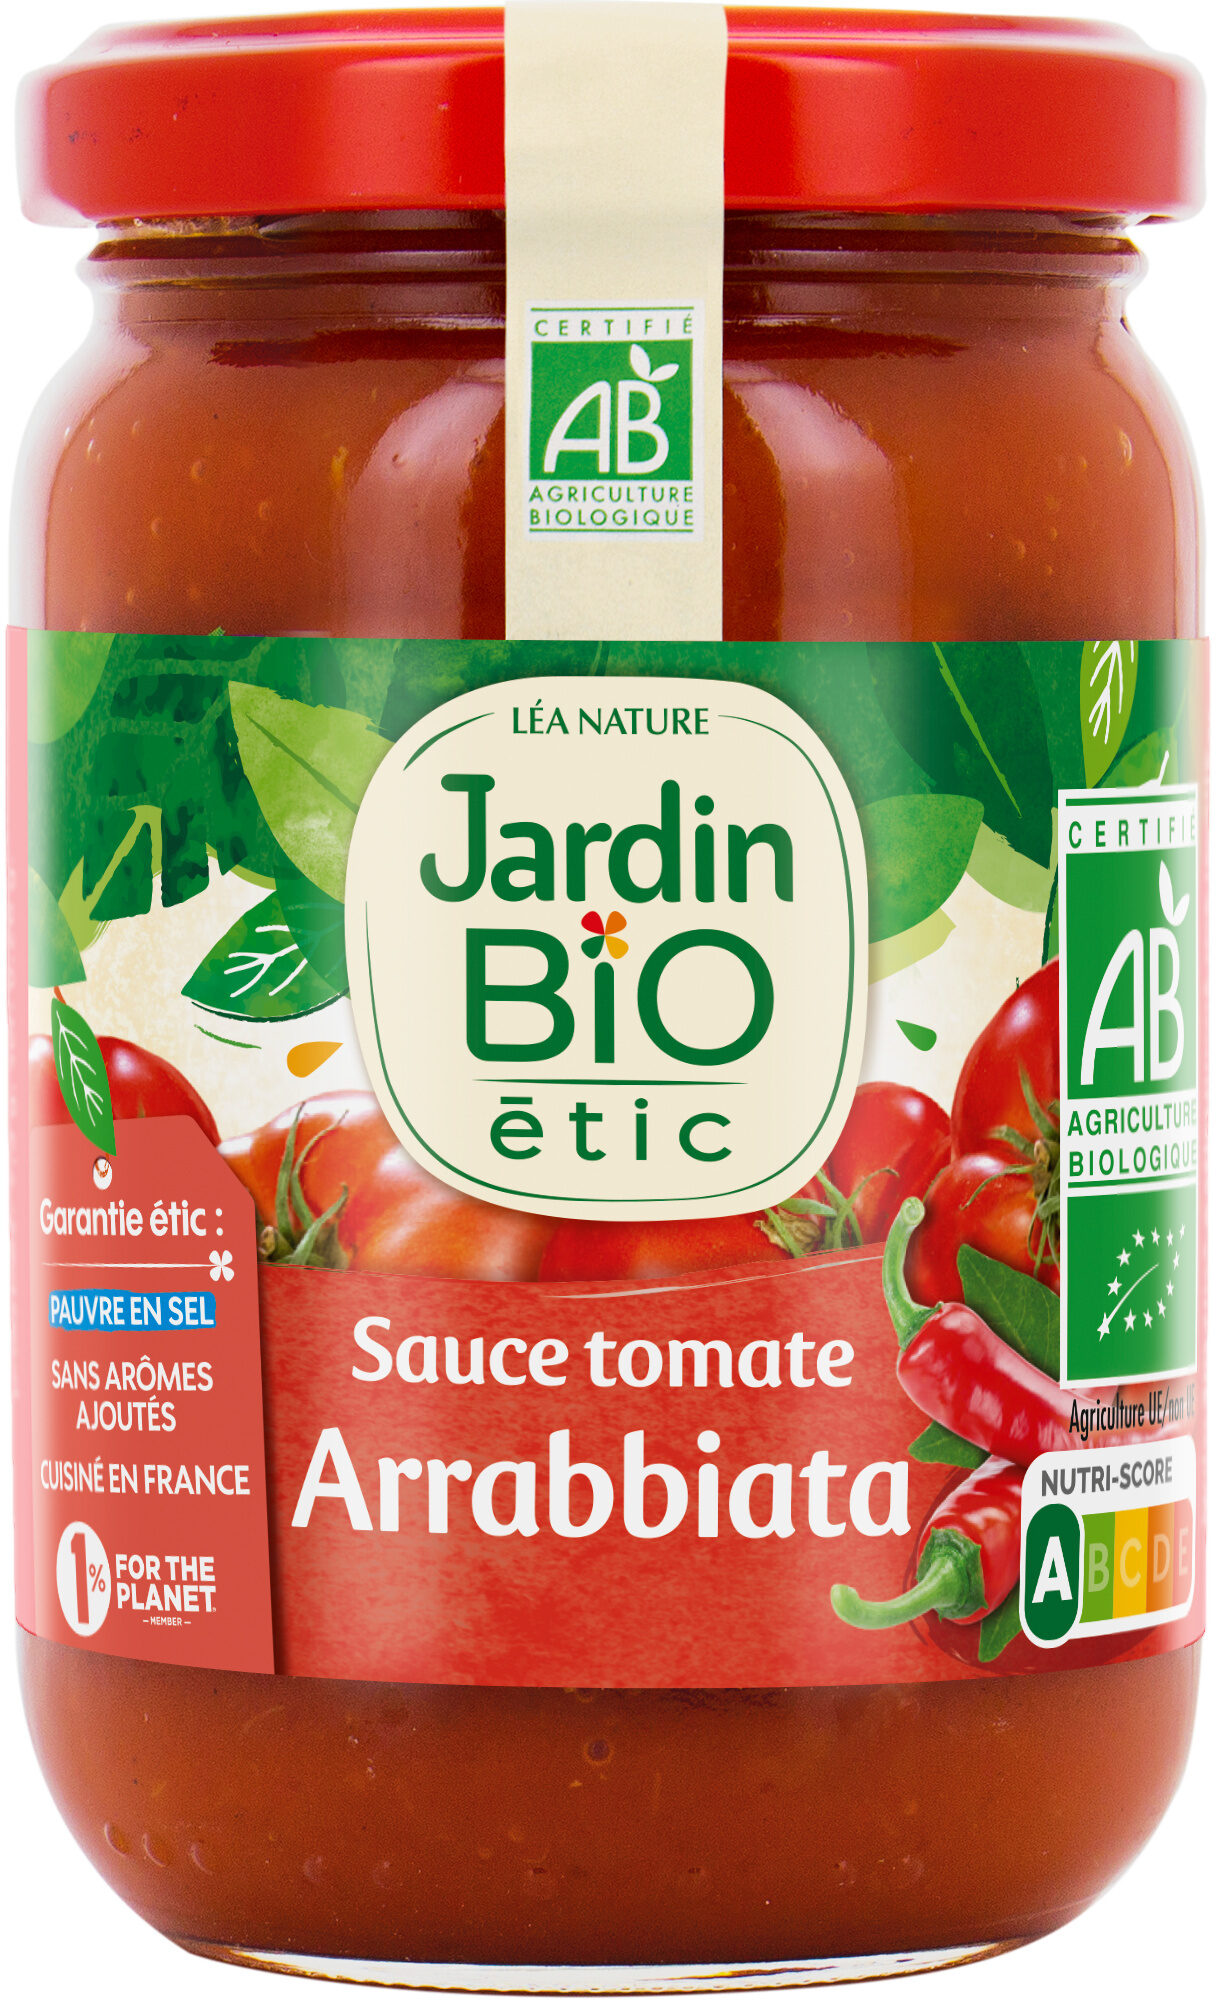 Sauce tomate Arrabiata - Product - fr